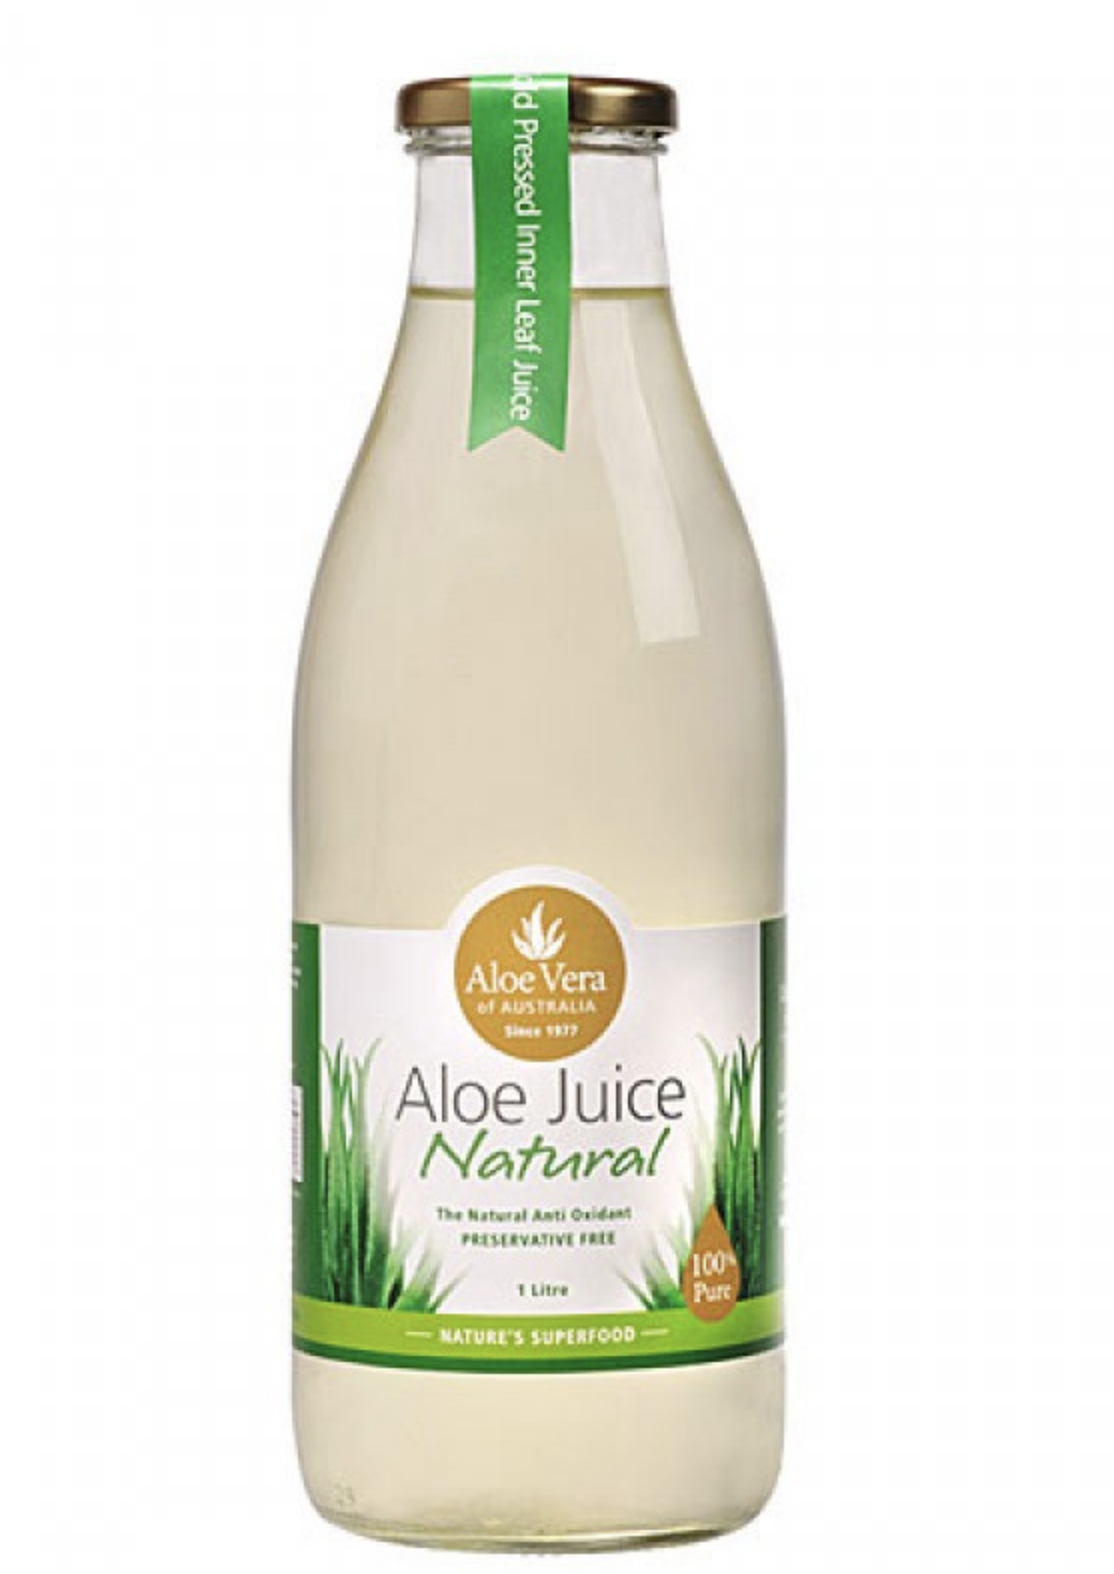 Aloe Juice Natural 1 litre